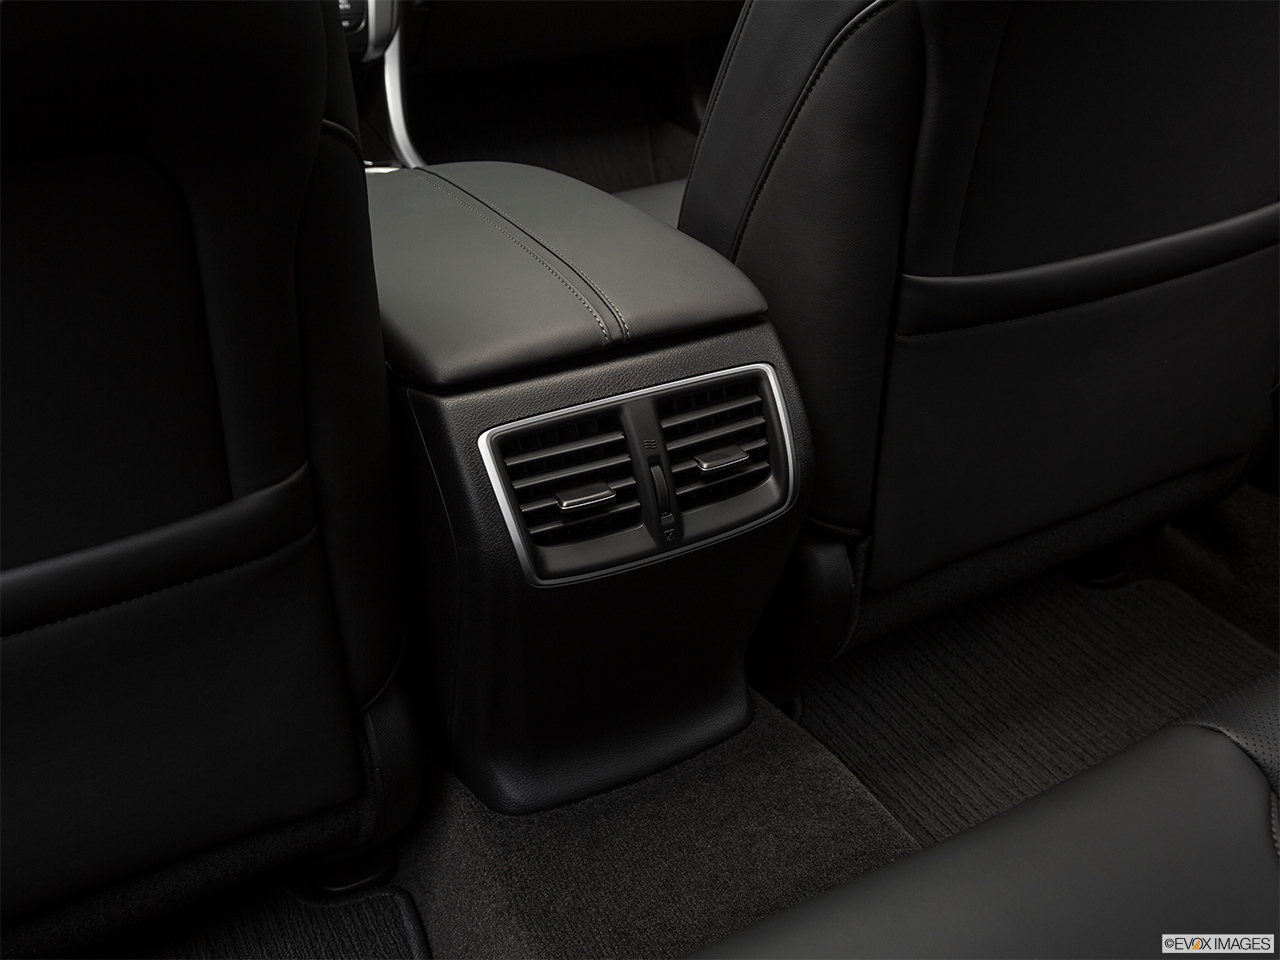 2017 Acura TLX 3.5L Rear A/C controls. 